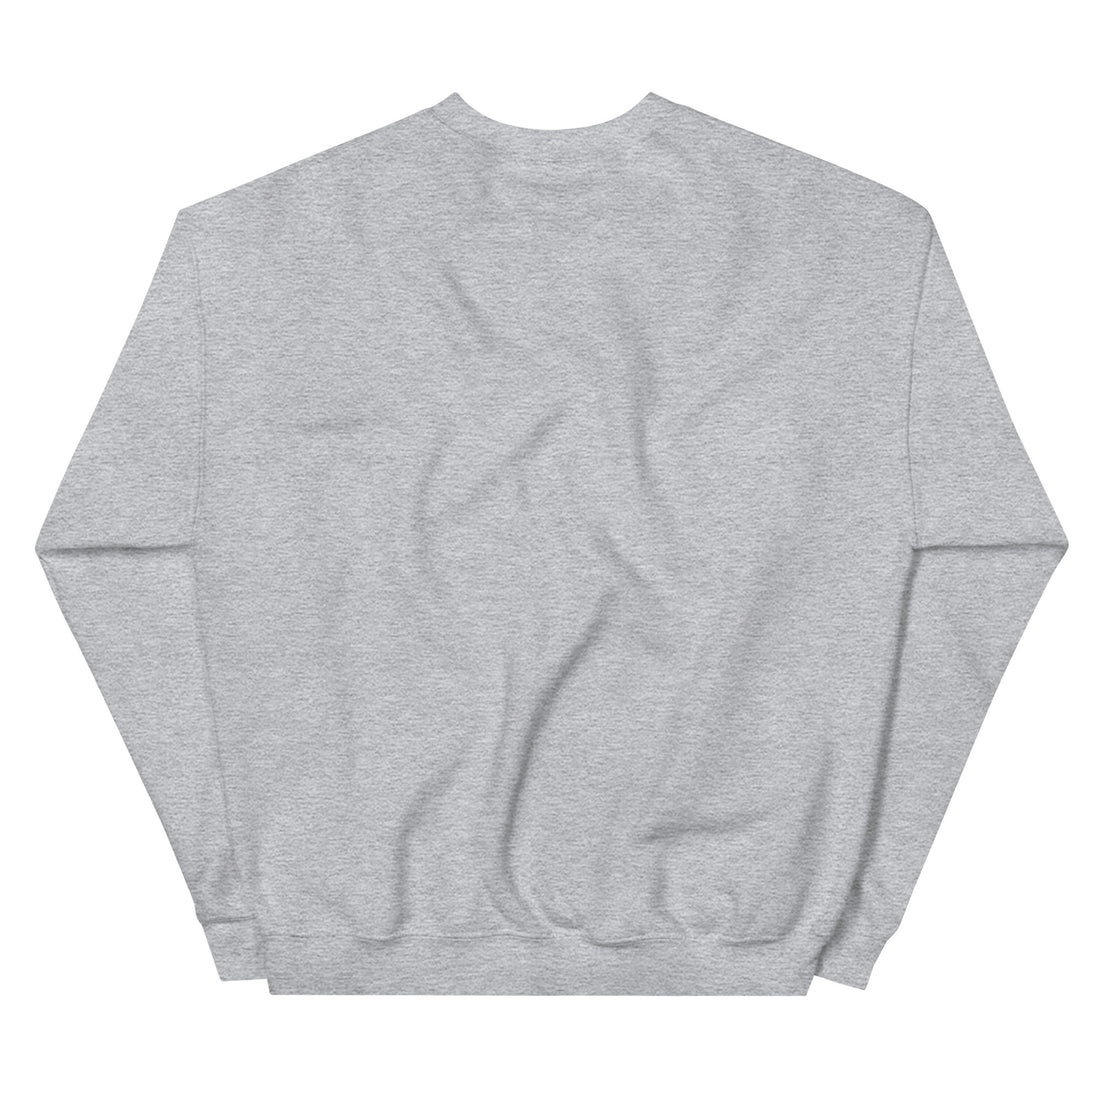 Riiink VGK – Sweatshirt